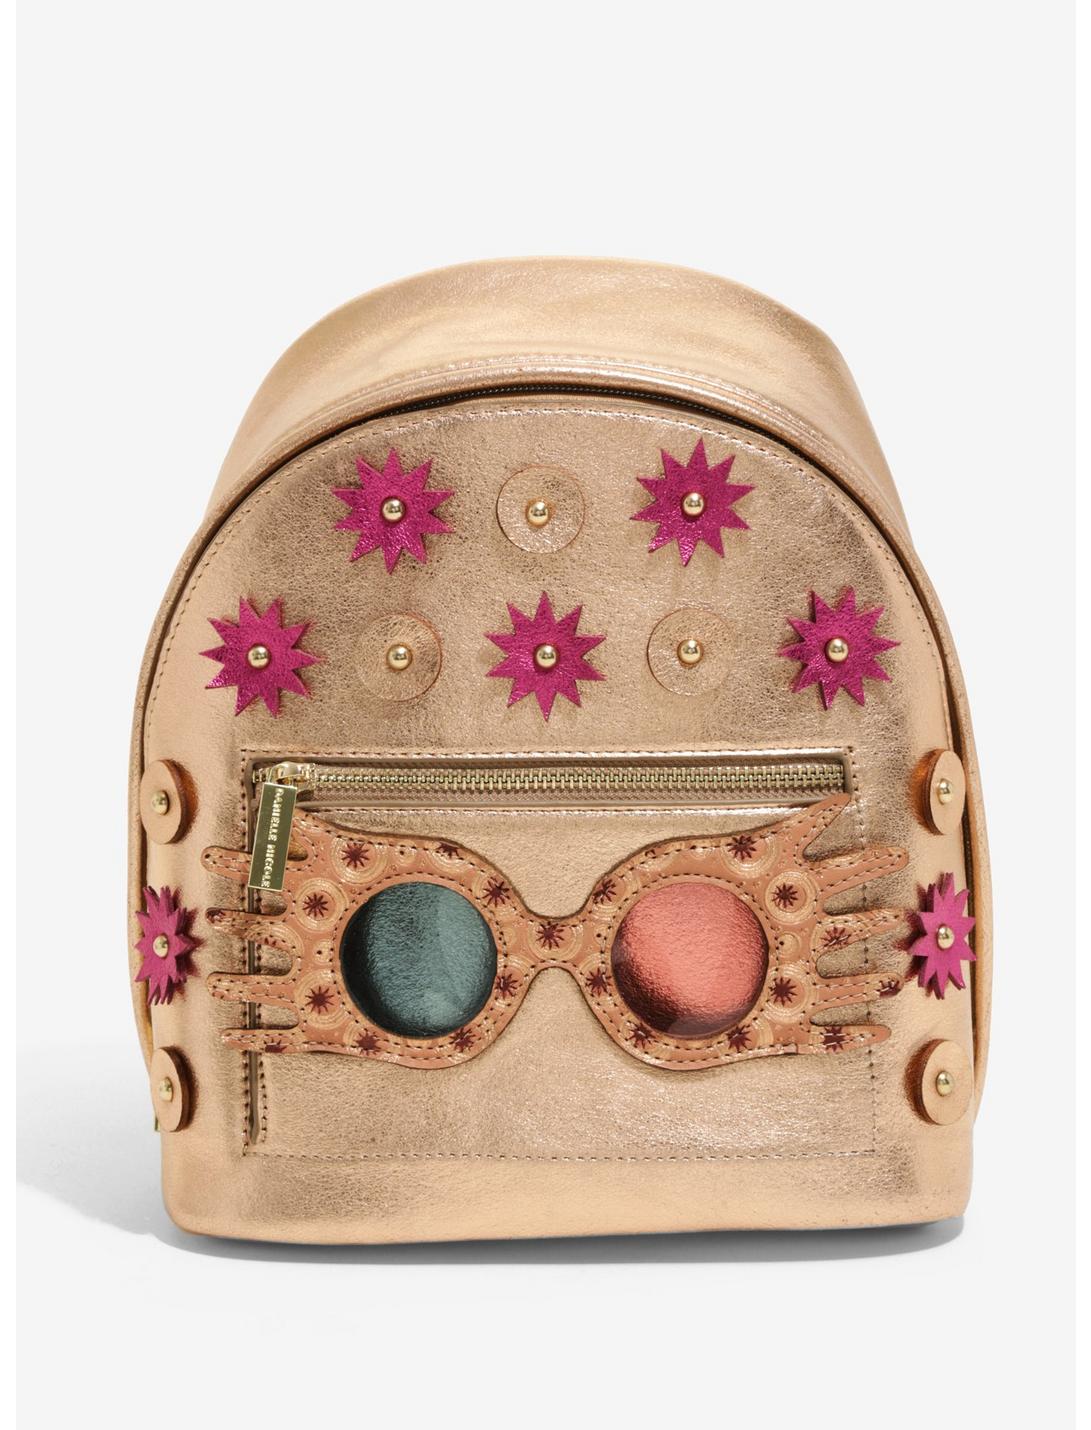 Danielle Nicole Harry Potter Luna Lovegood Mini Backpack - BoxLunch Exclusive, , hi-res